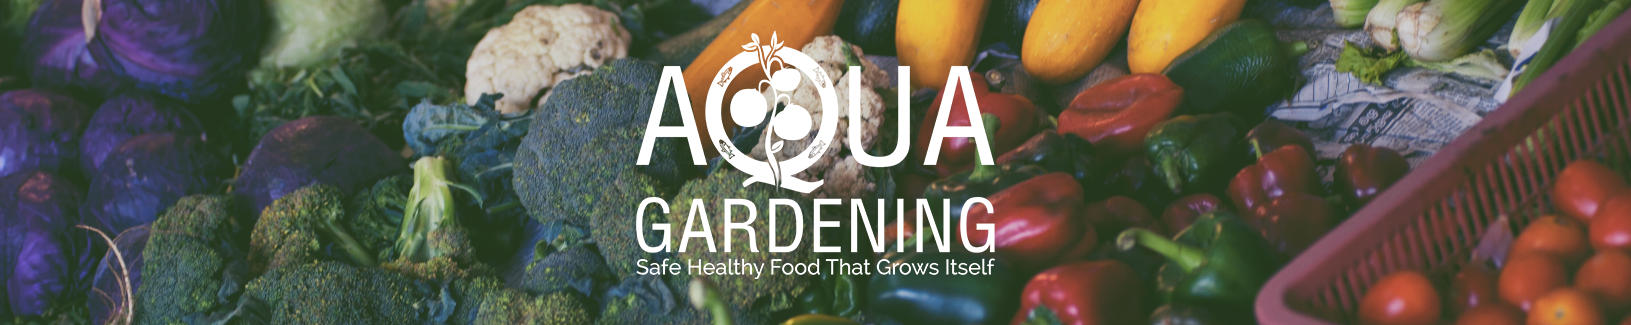 Aqua Gardening - Safe Healthy Food That Grows Itself